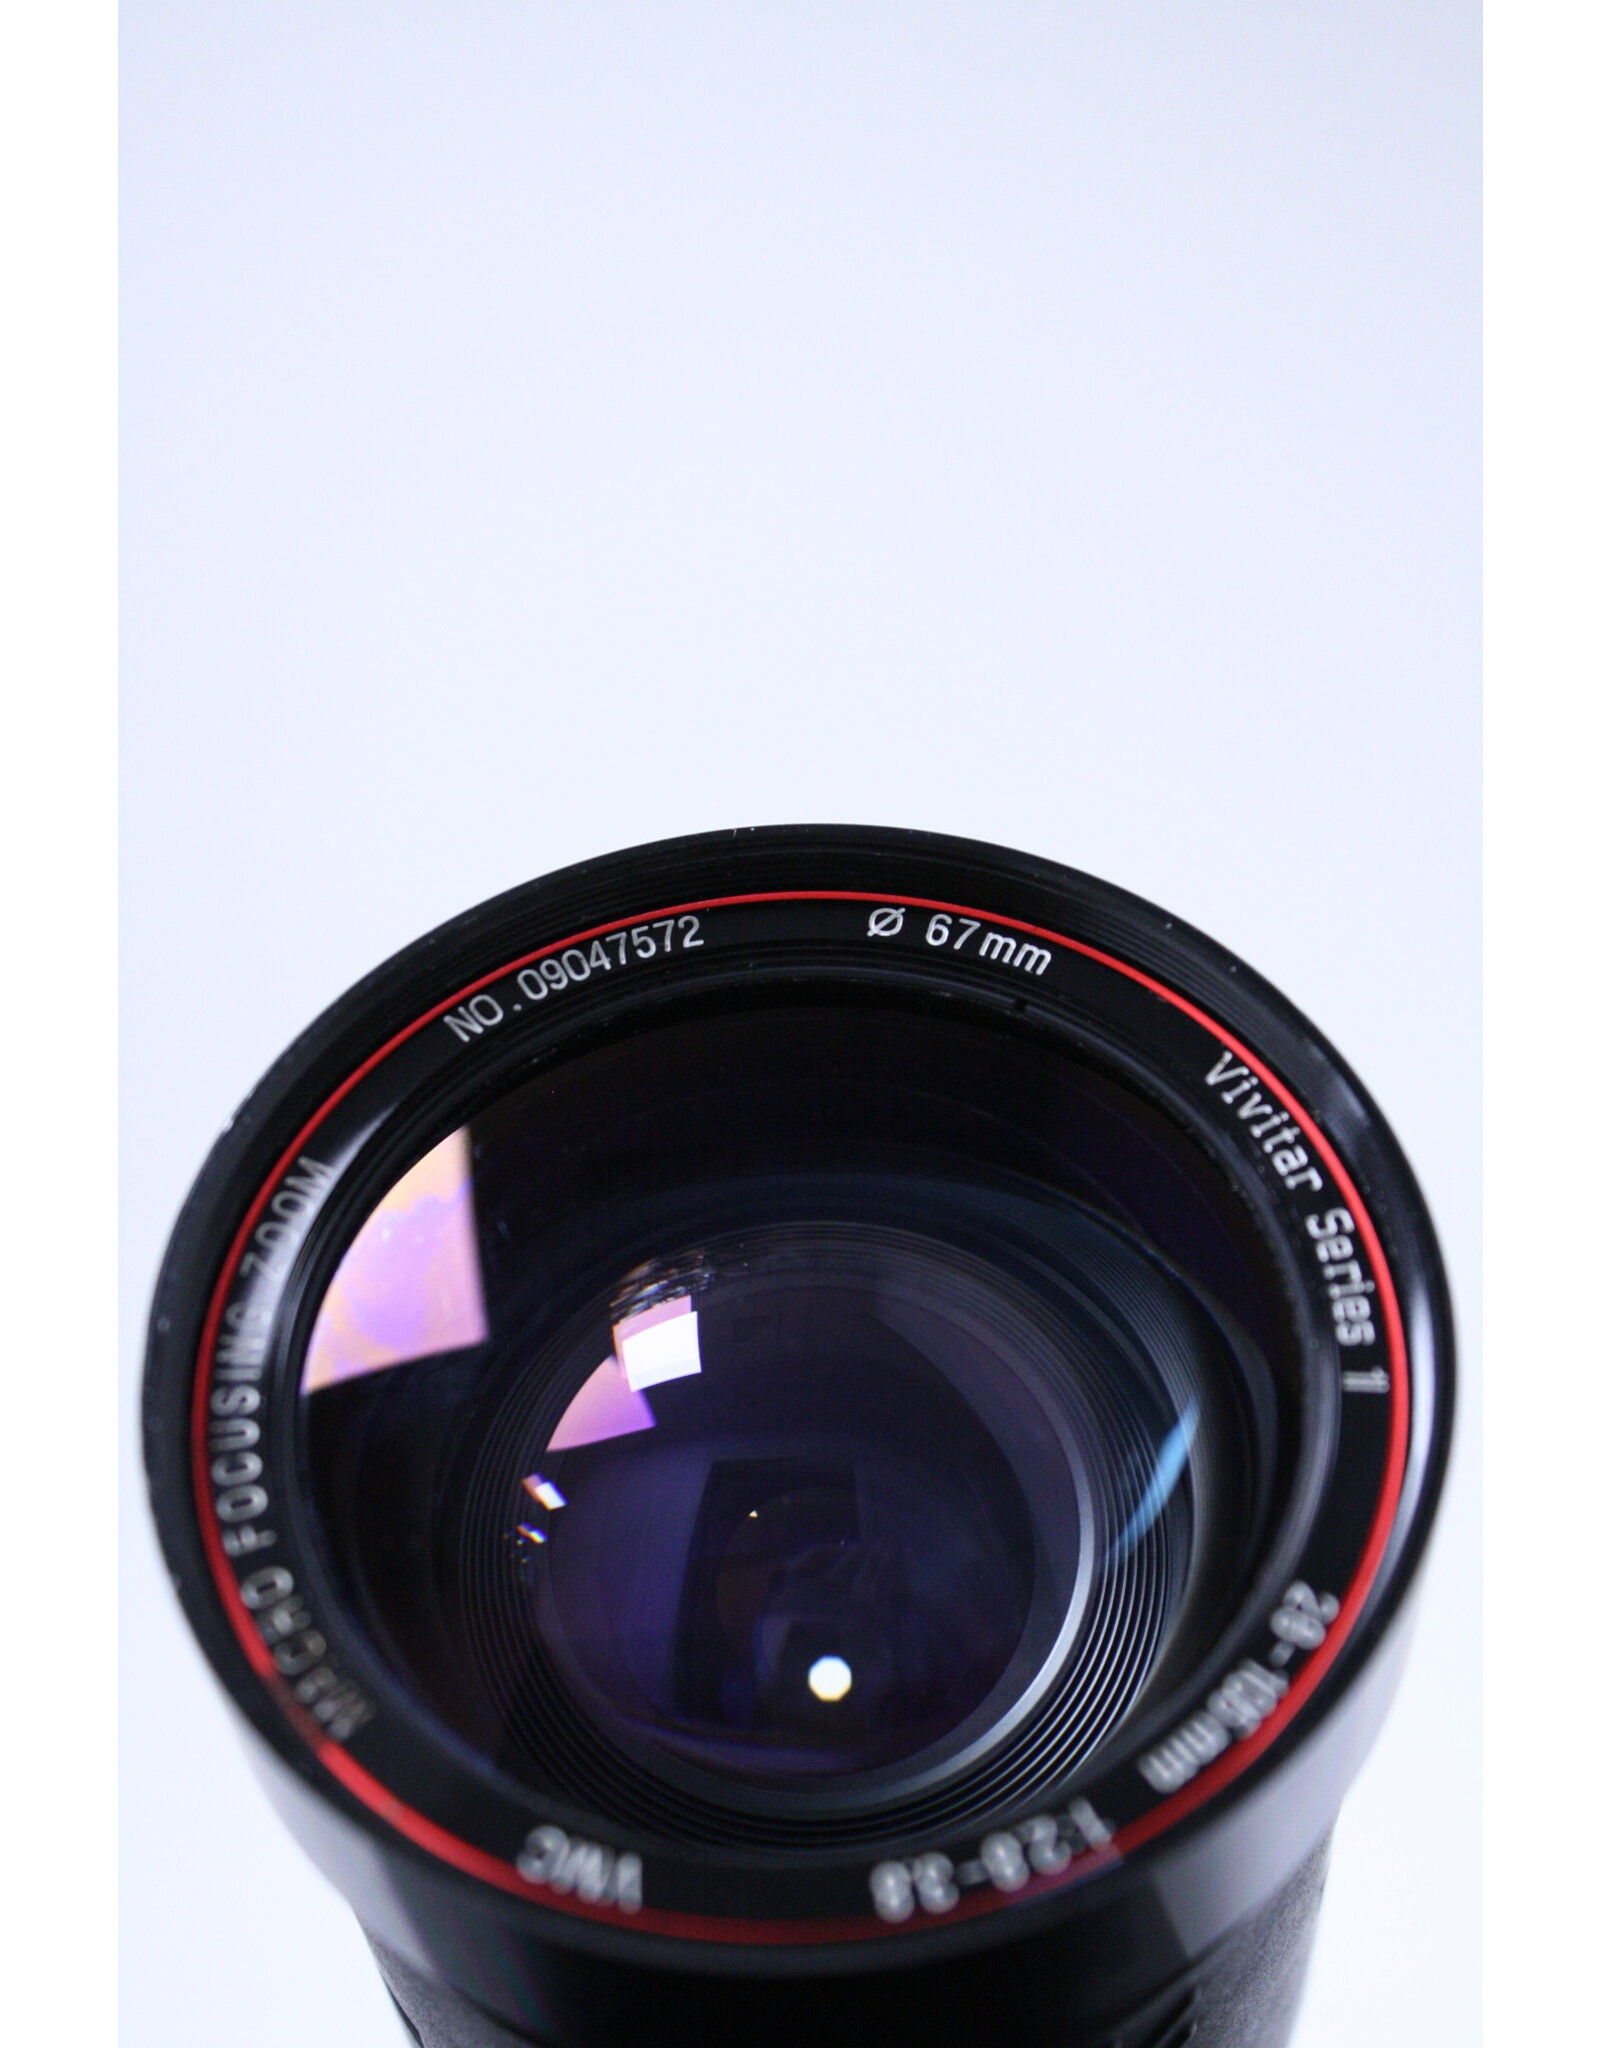 Nikkormat FT w/ Vivitar Series 1 28-105mm f/2.8 lens (Pre-Owned)